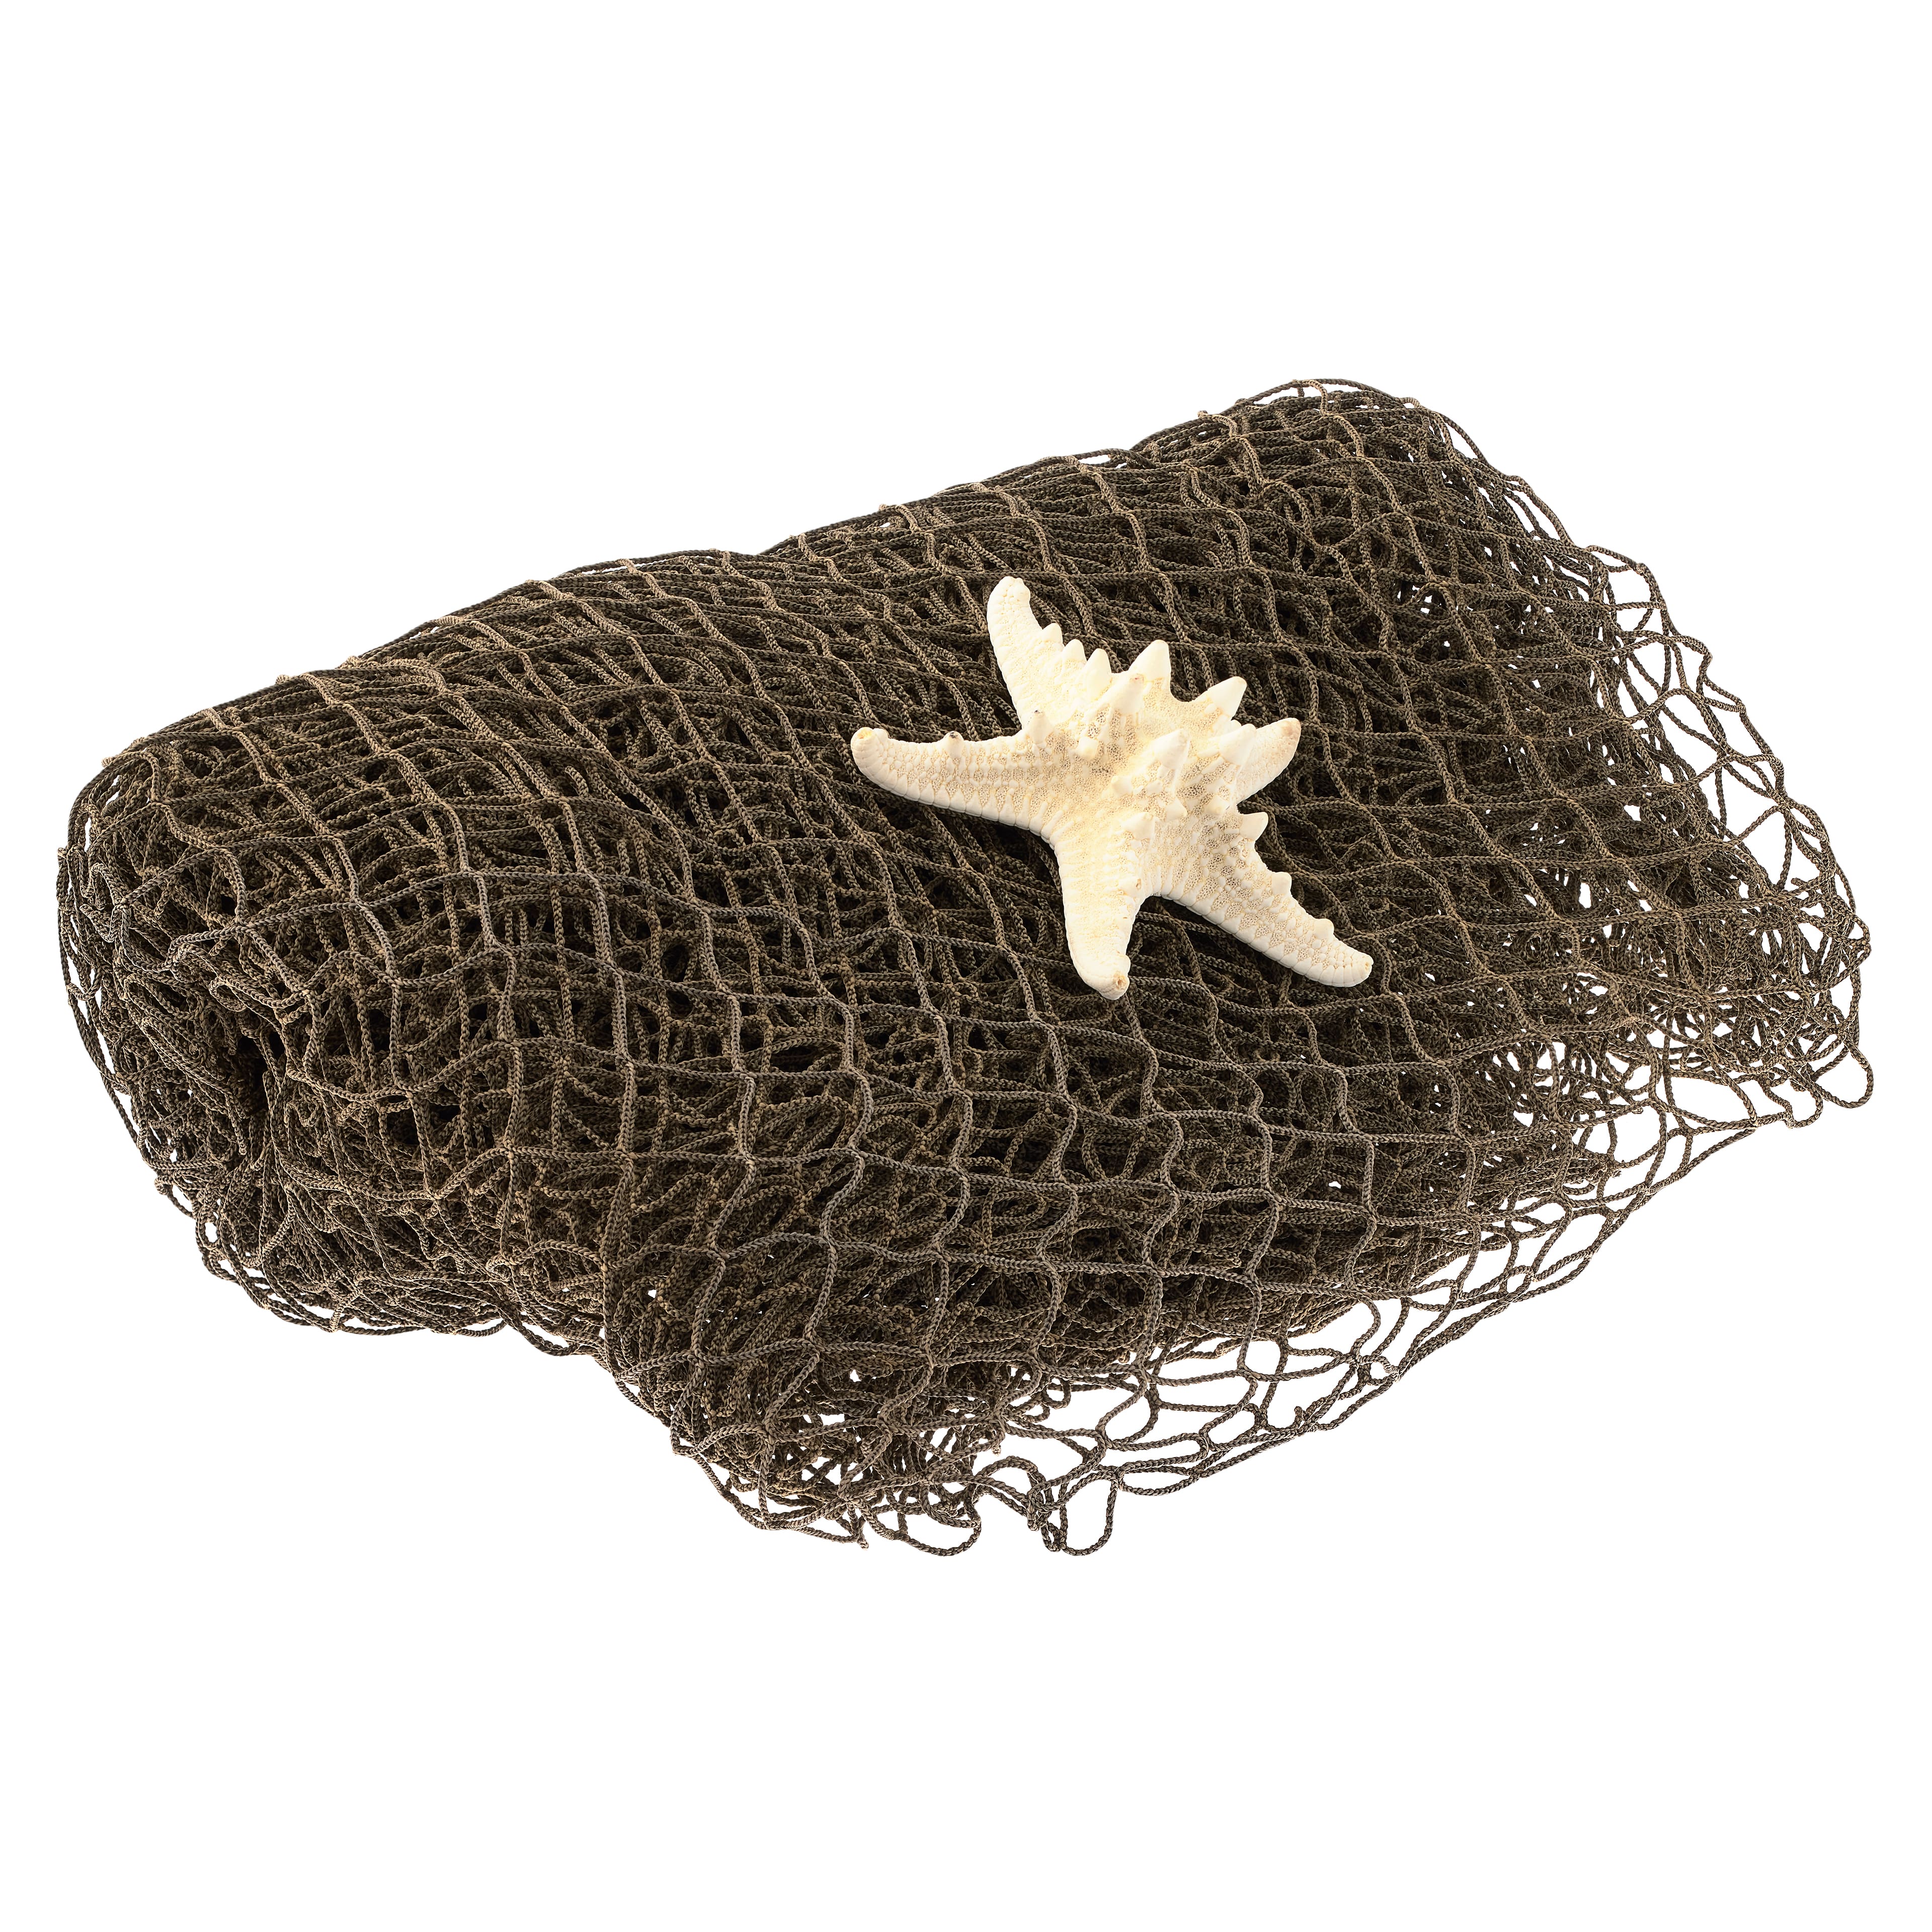 U.S. Shell Inc. Decorative Fishing Net - each